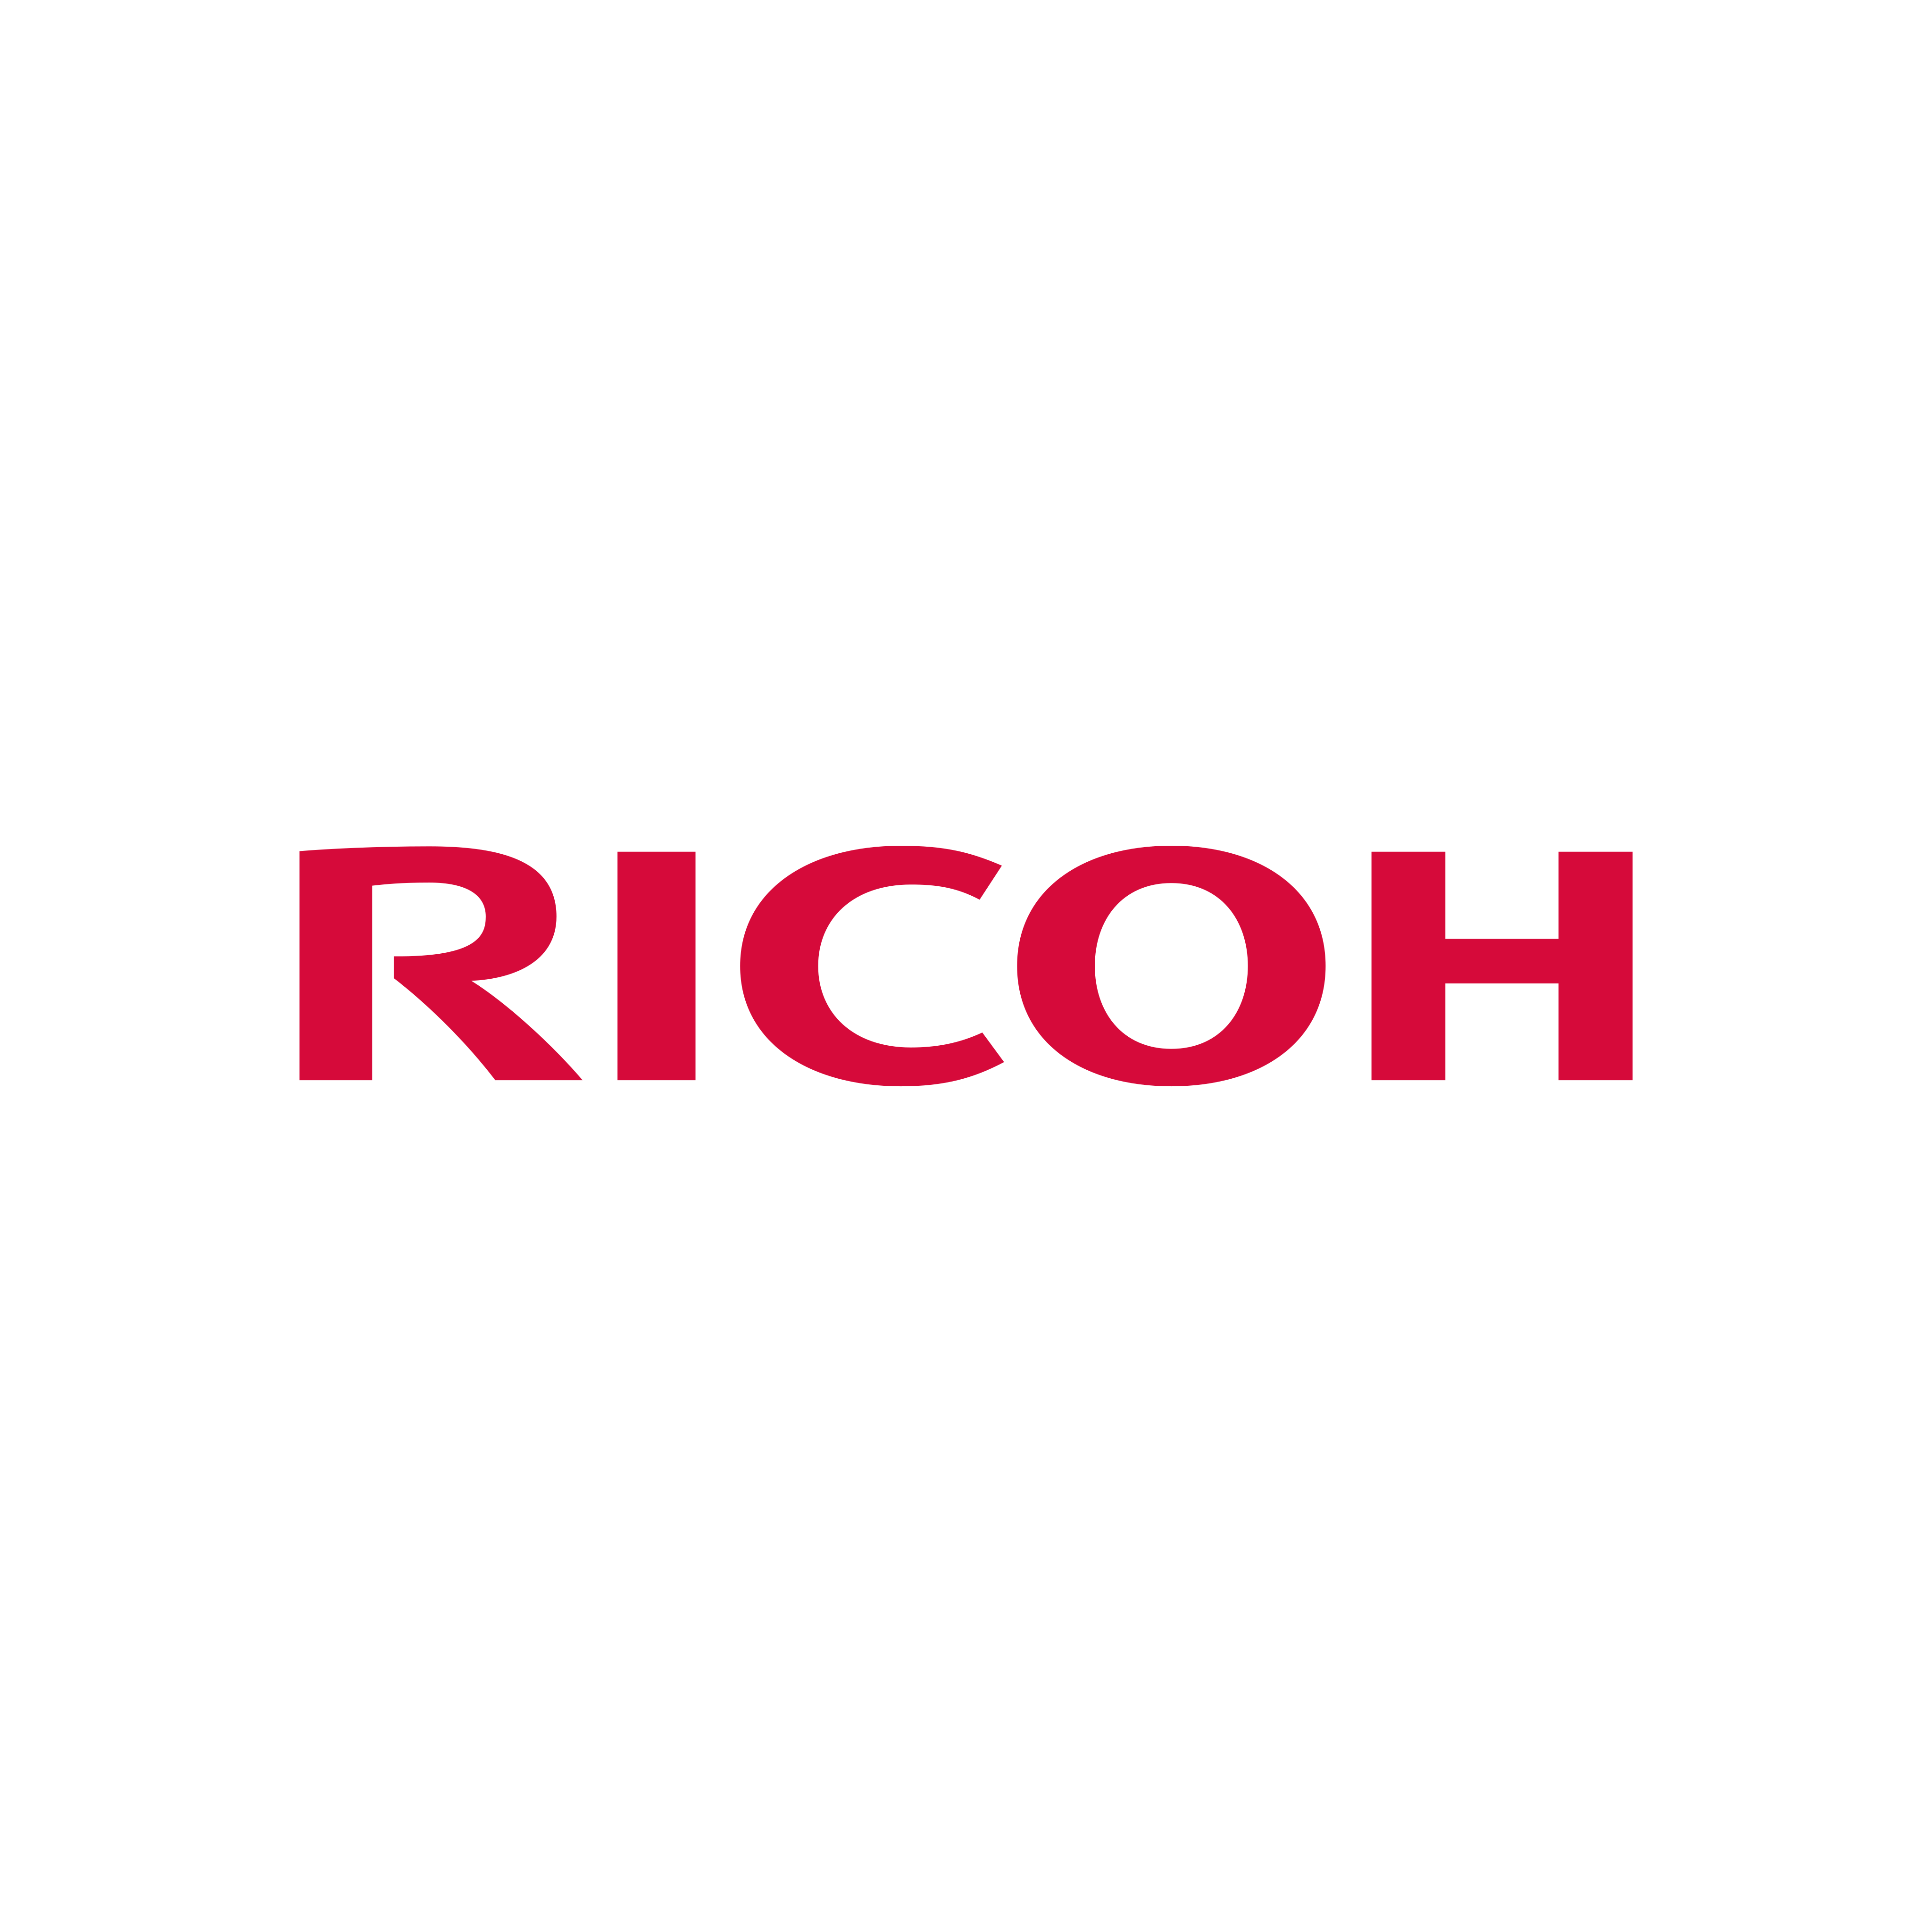 Ricoh Logo PNG.